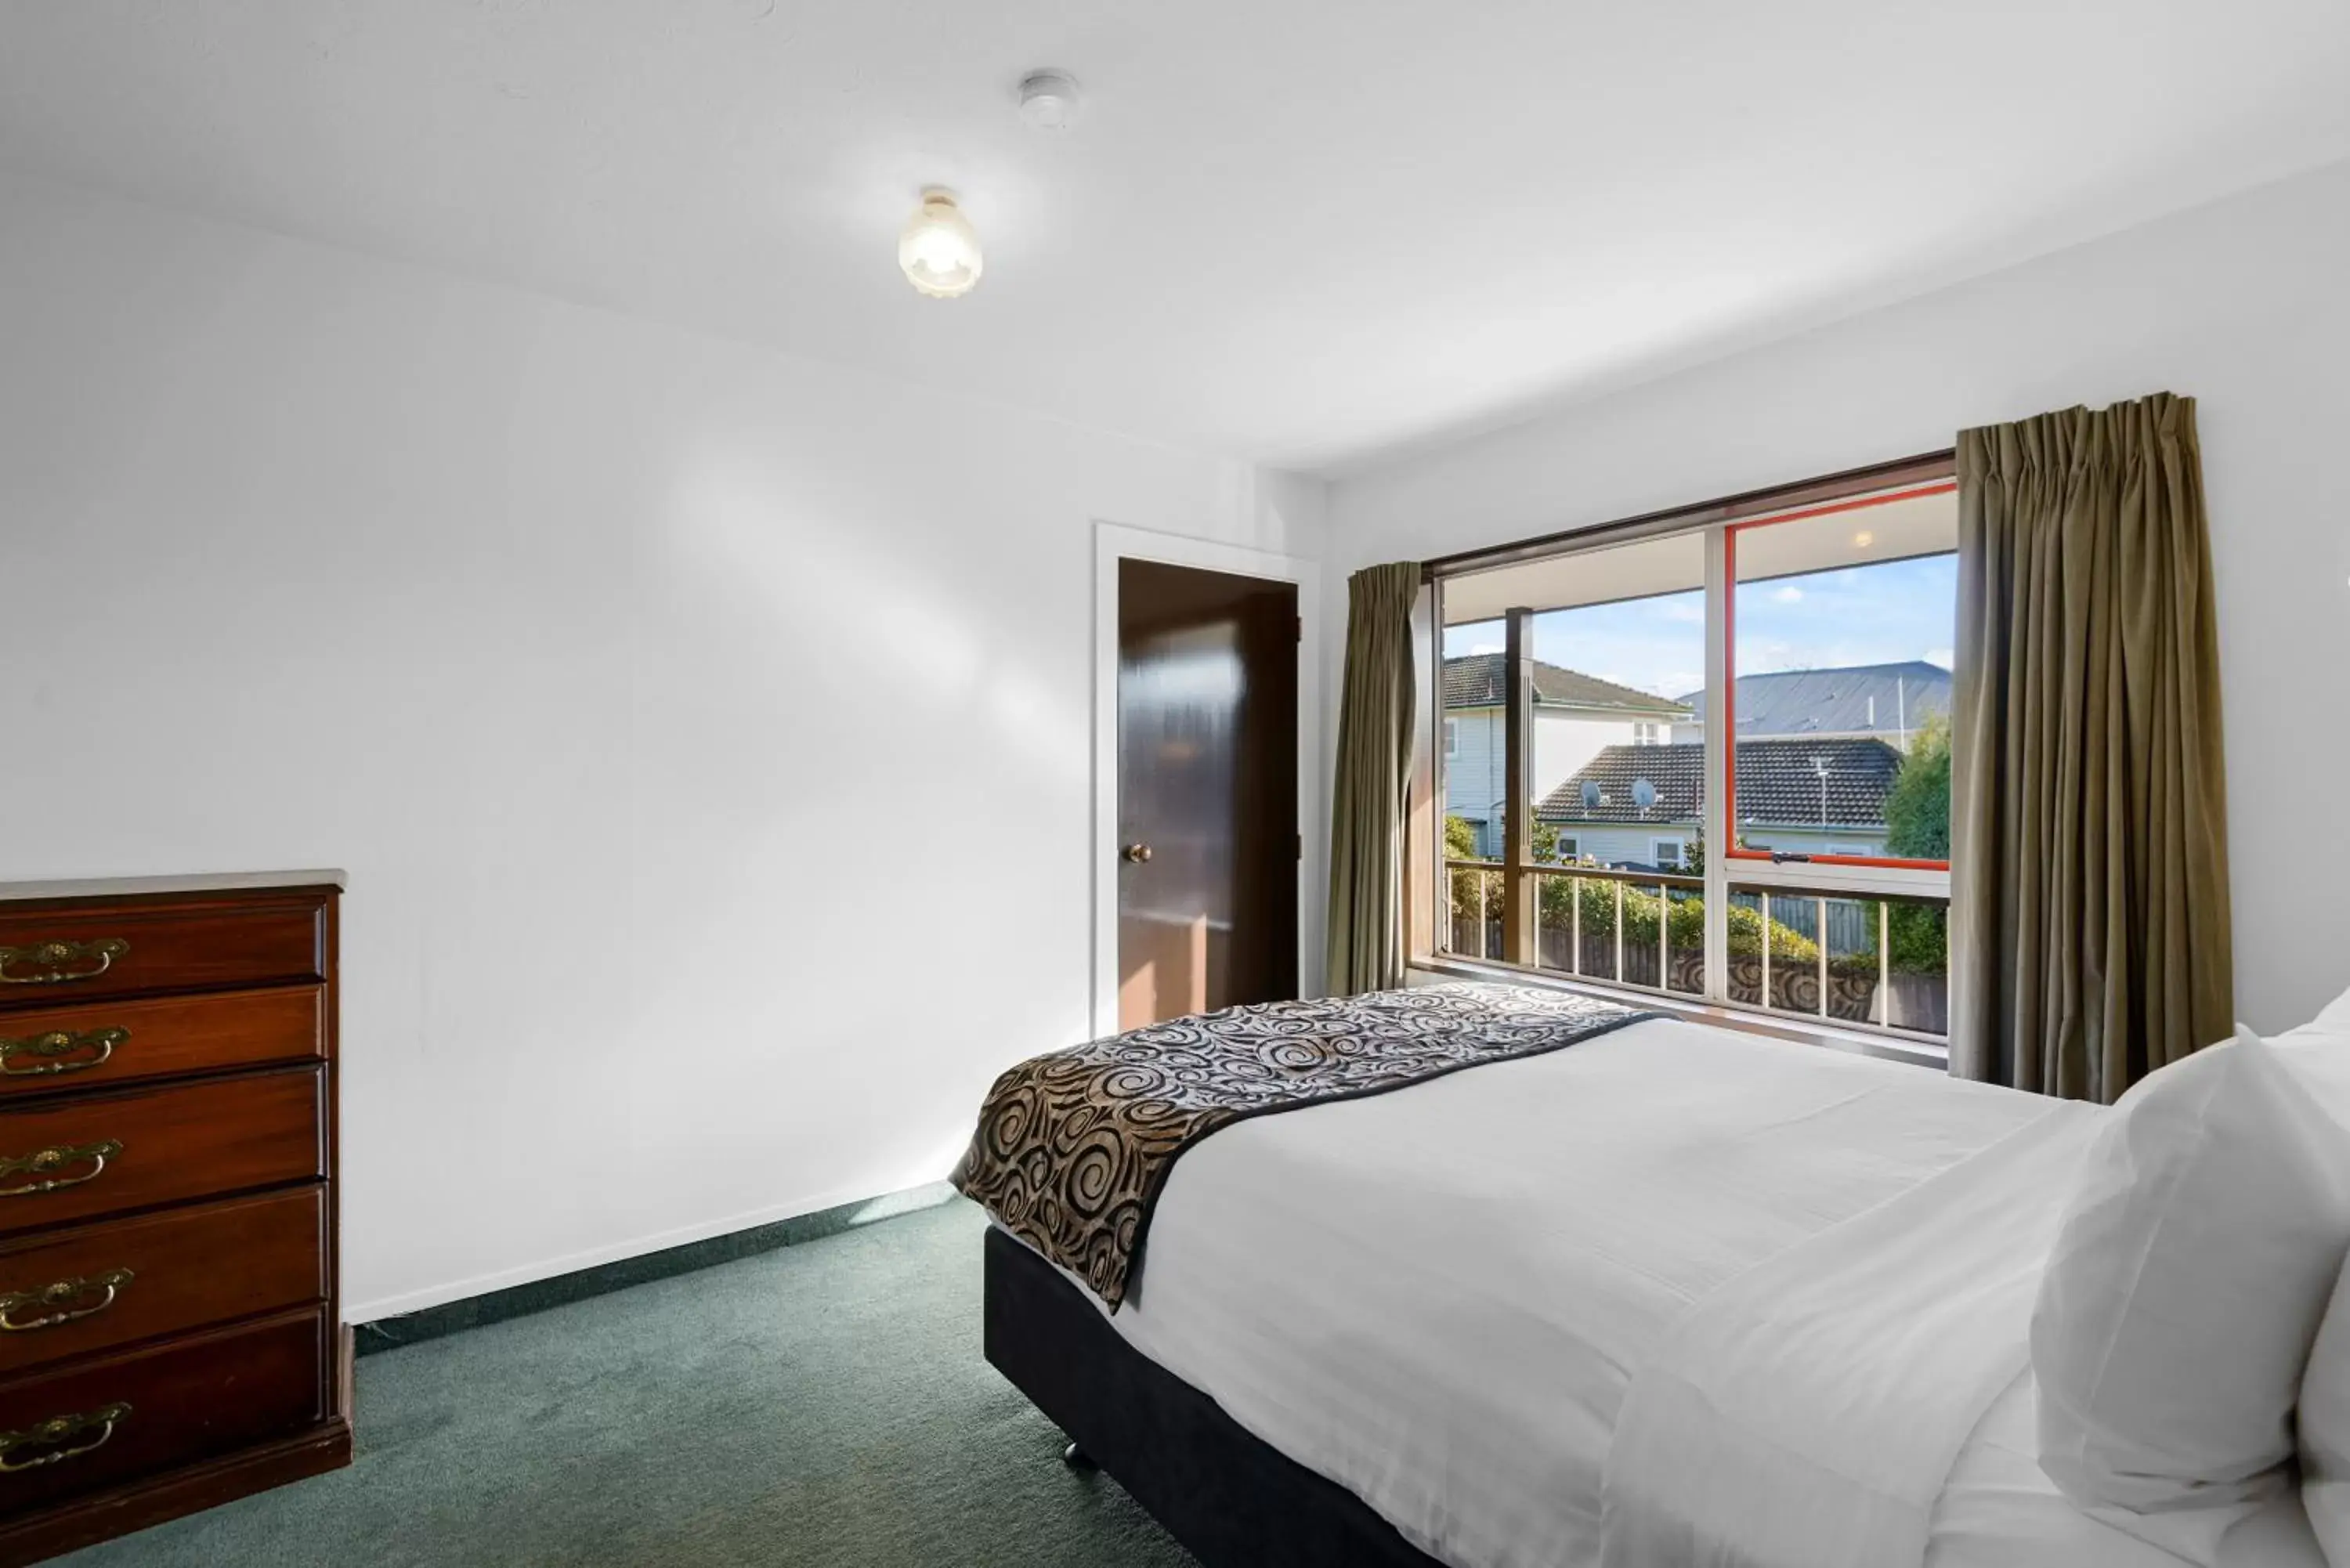 Bedroom in Scenic Hotel Cotswold